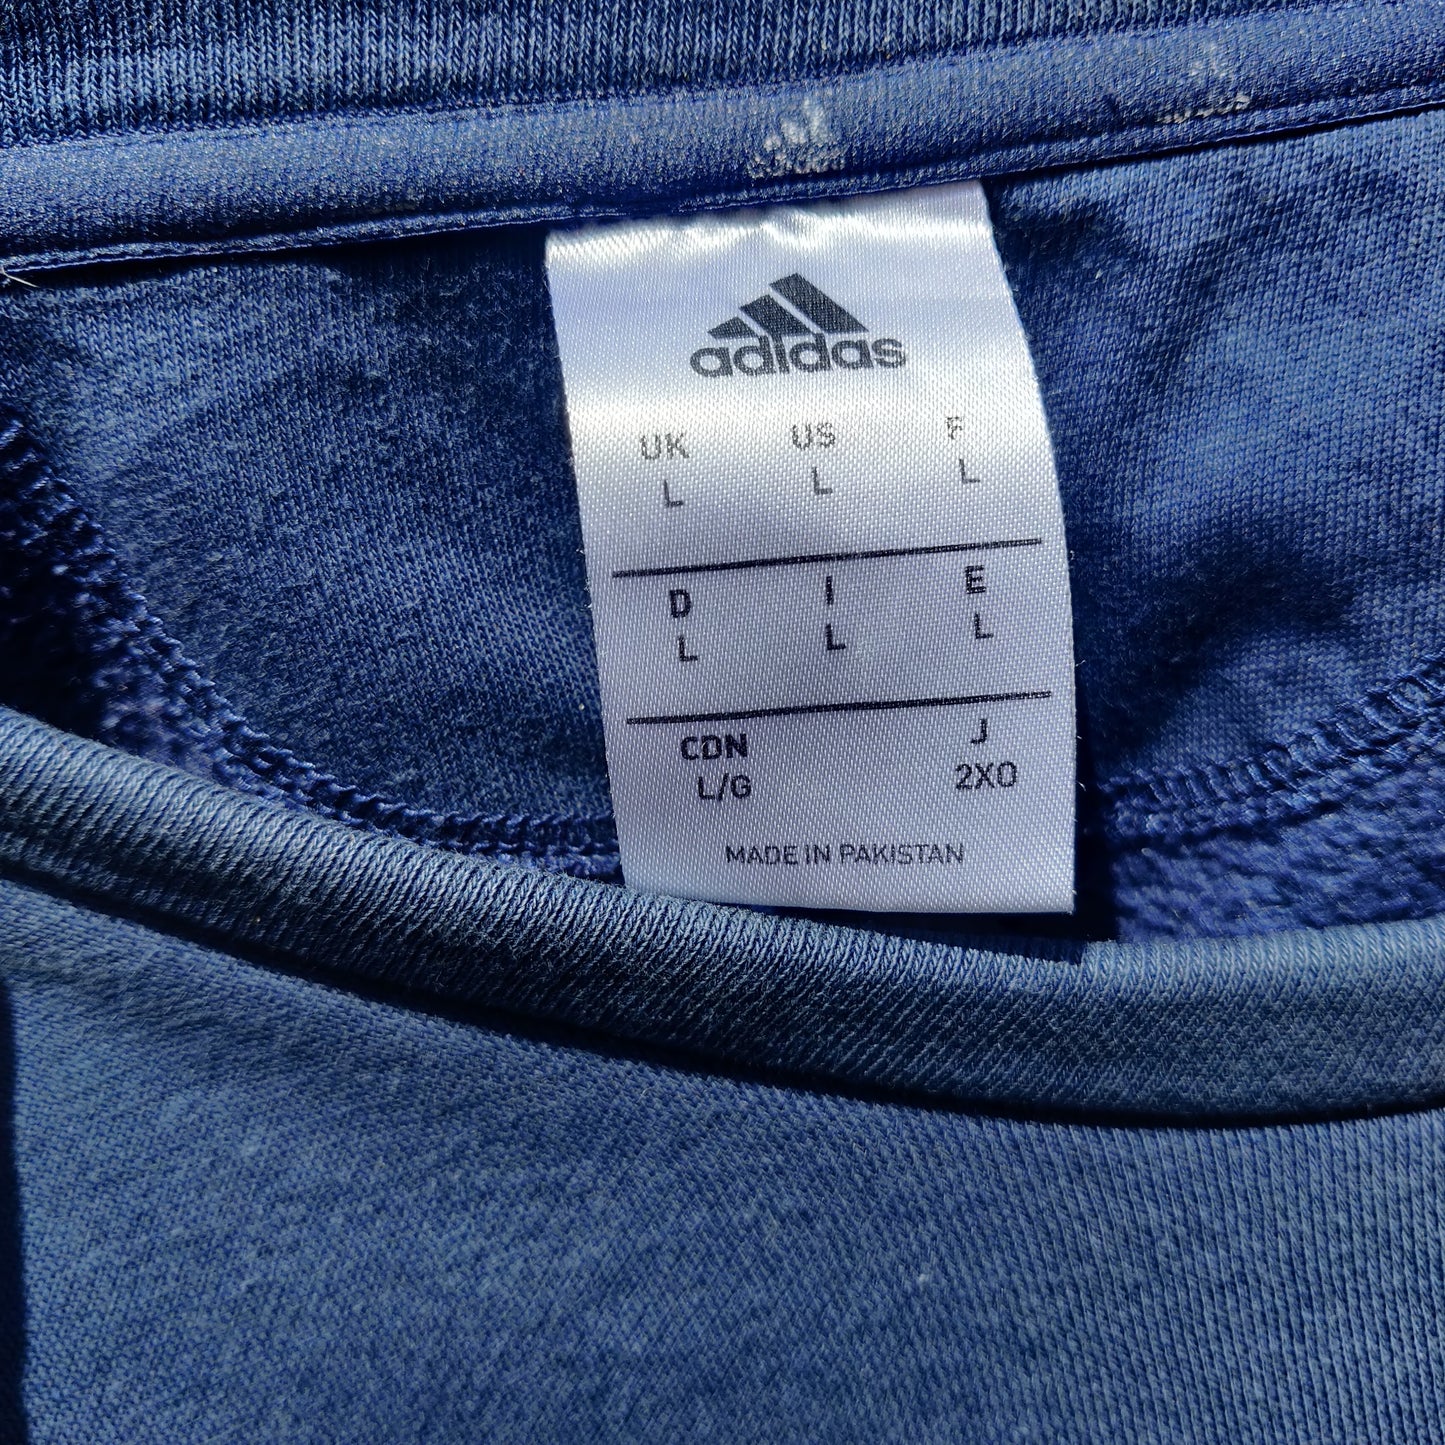 Adidas 3 Stripes Blue White Logo Spell Out Crew Neck Sweatshirt Jumper Men Large